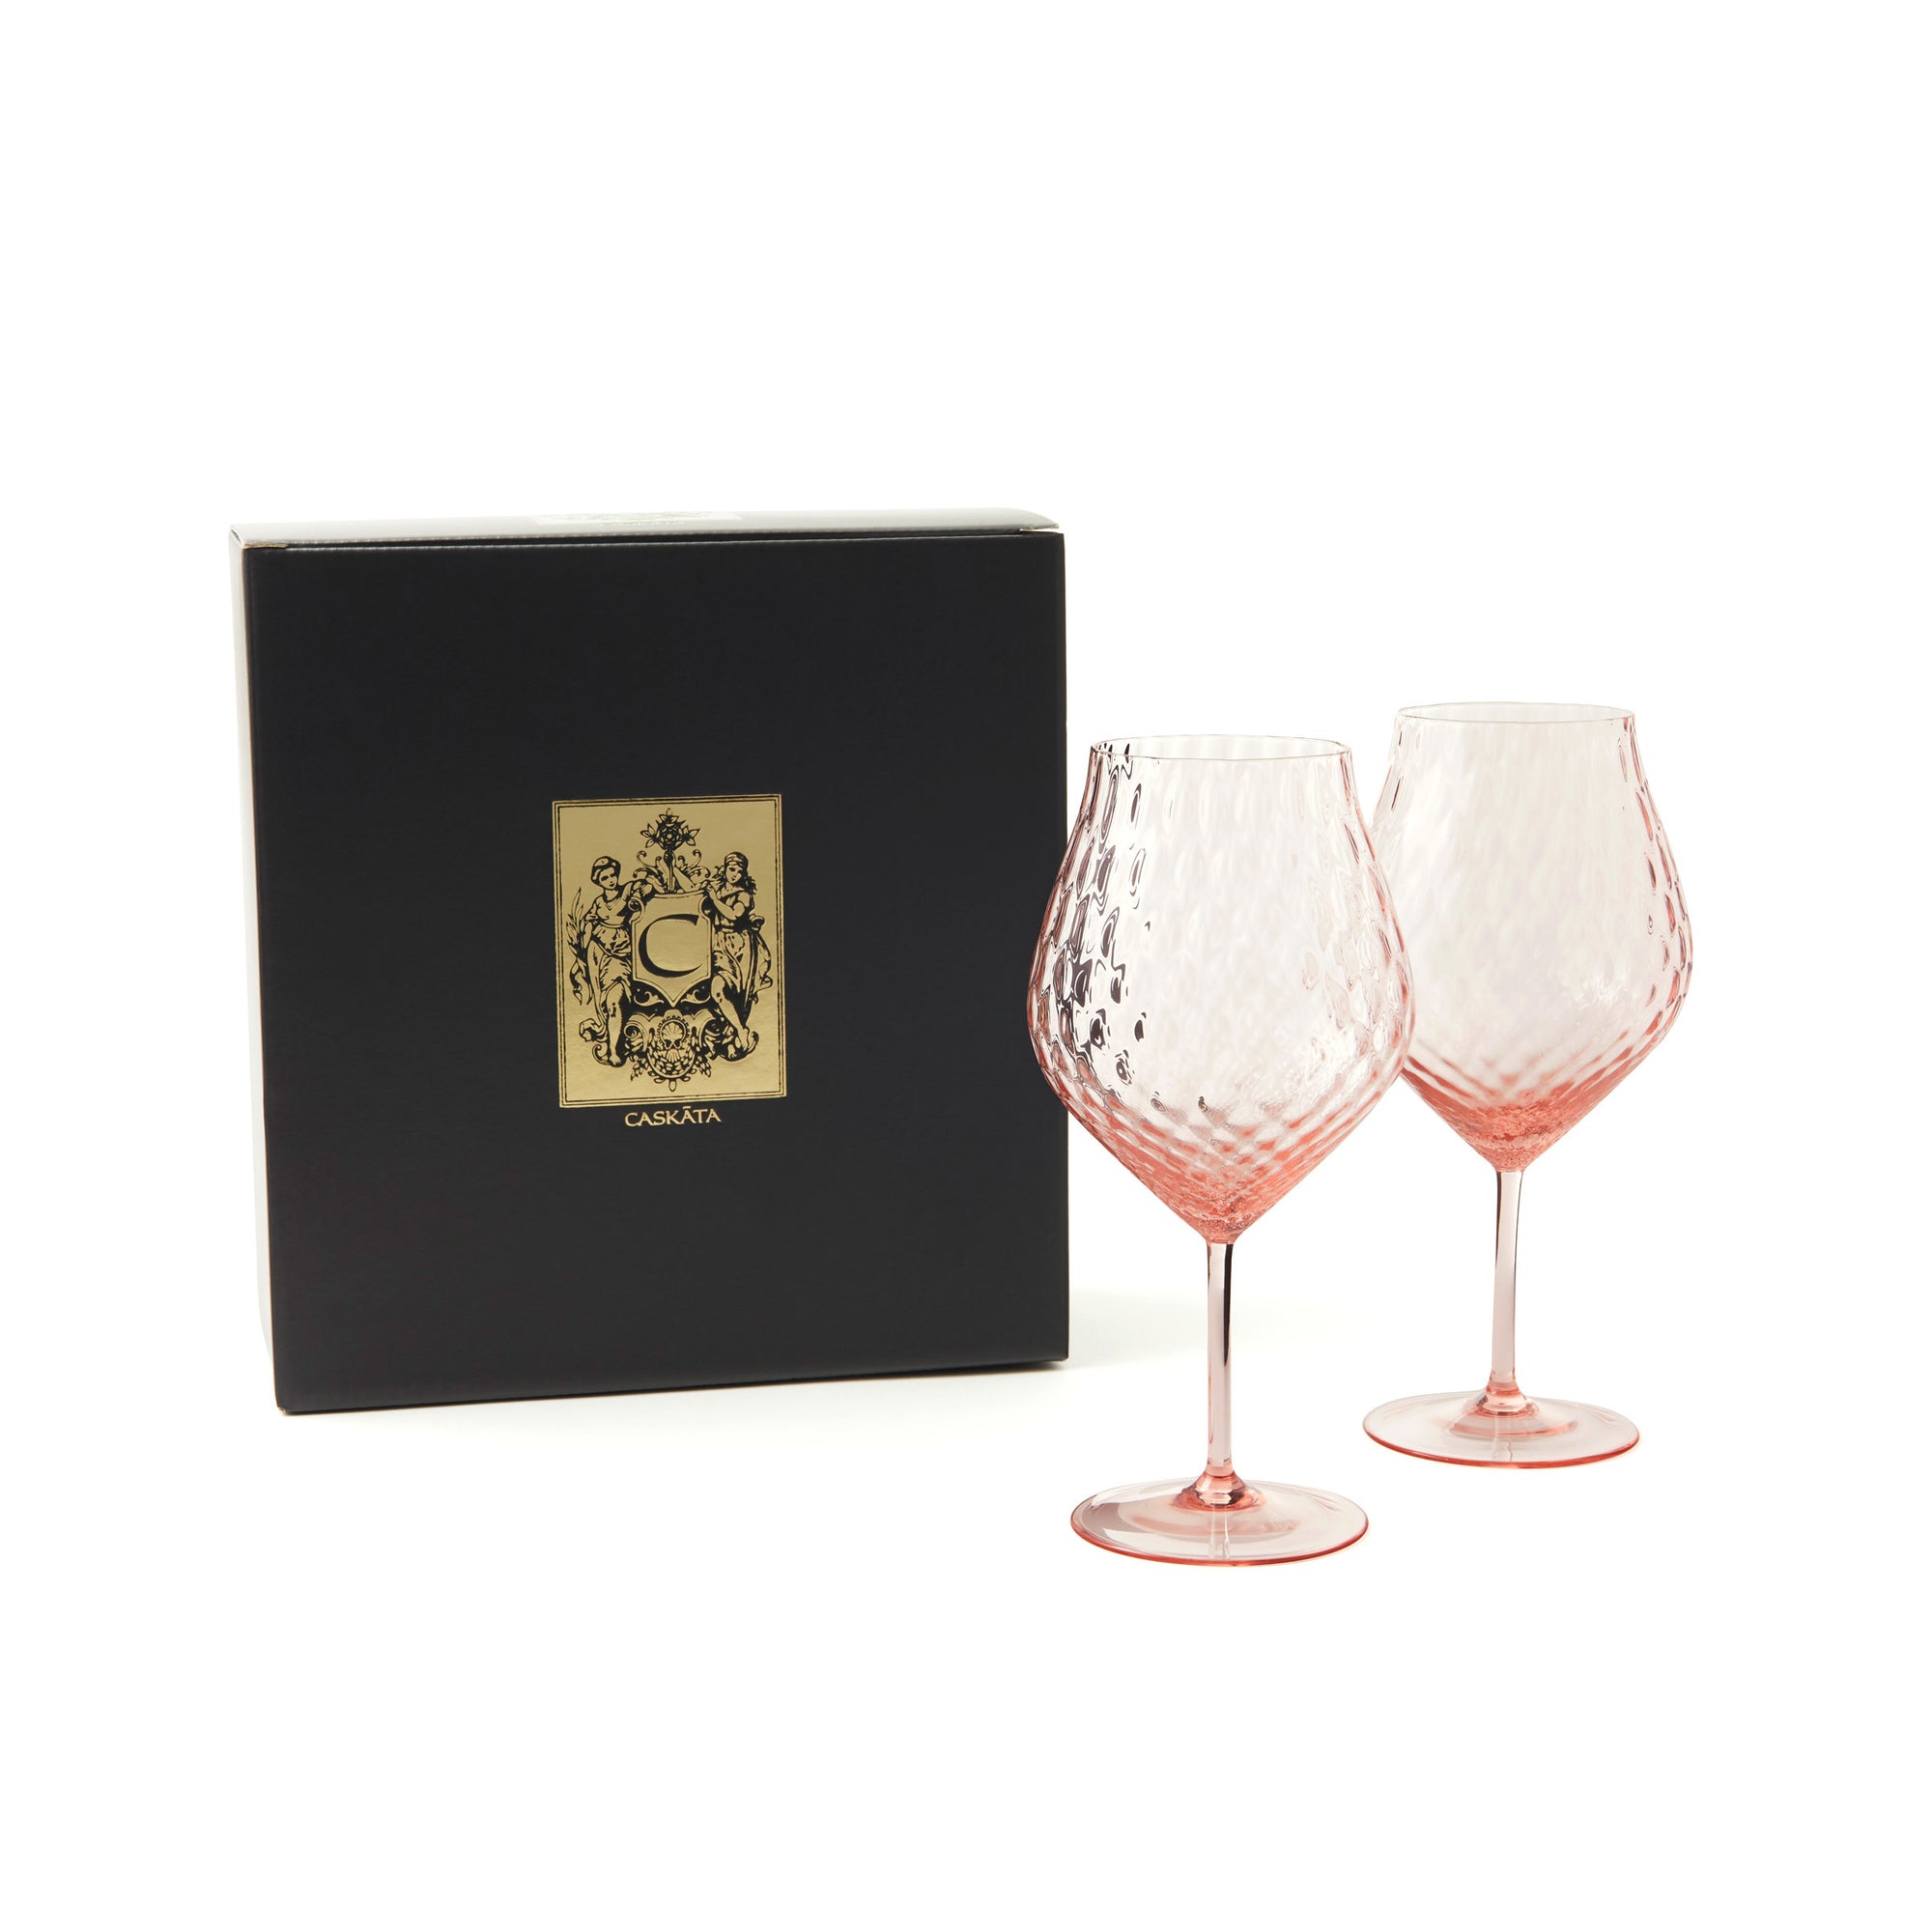 Phoebe rose pink crystal tulip universal wine glasses from Caskata.